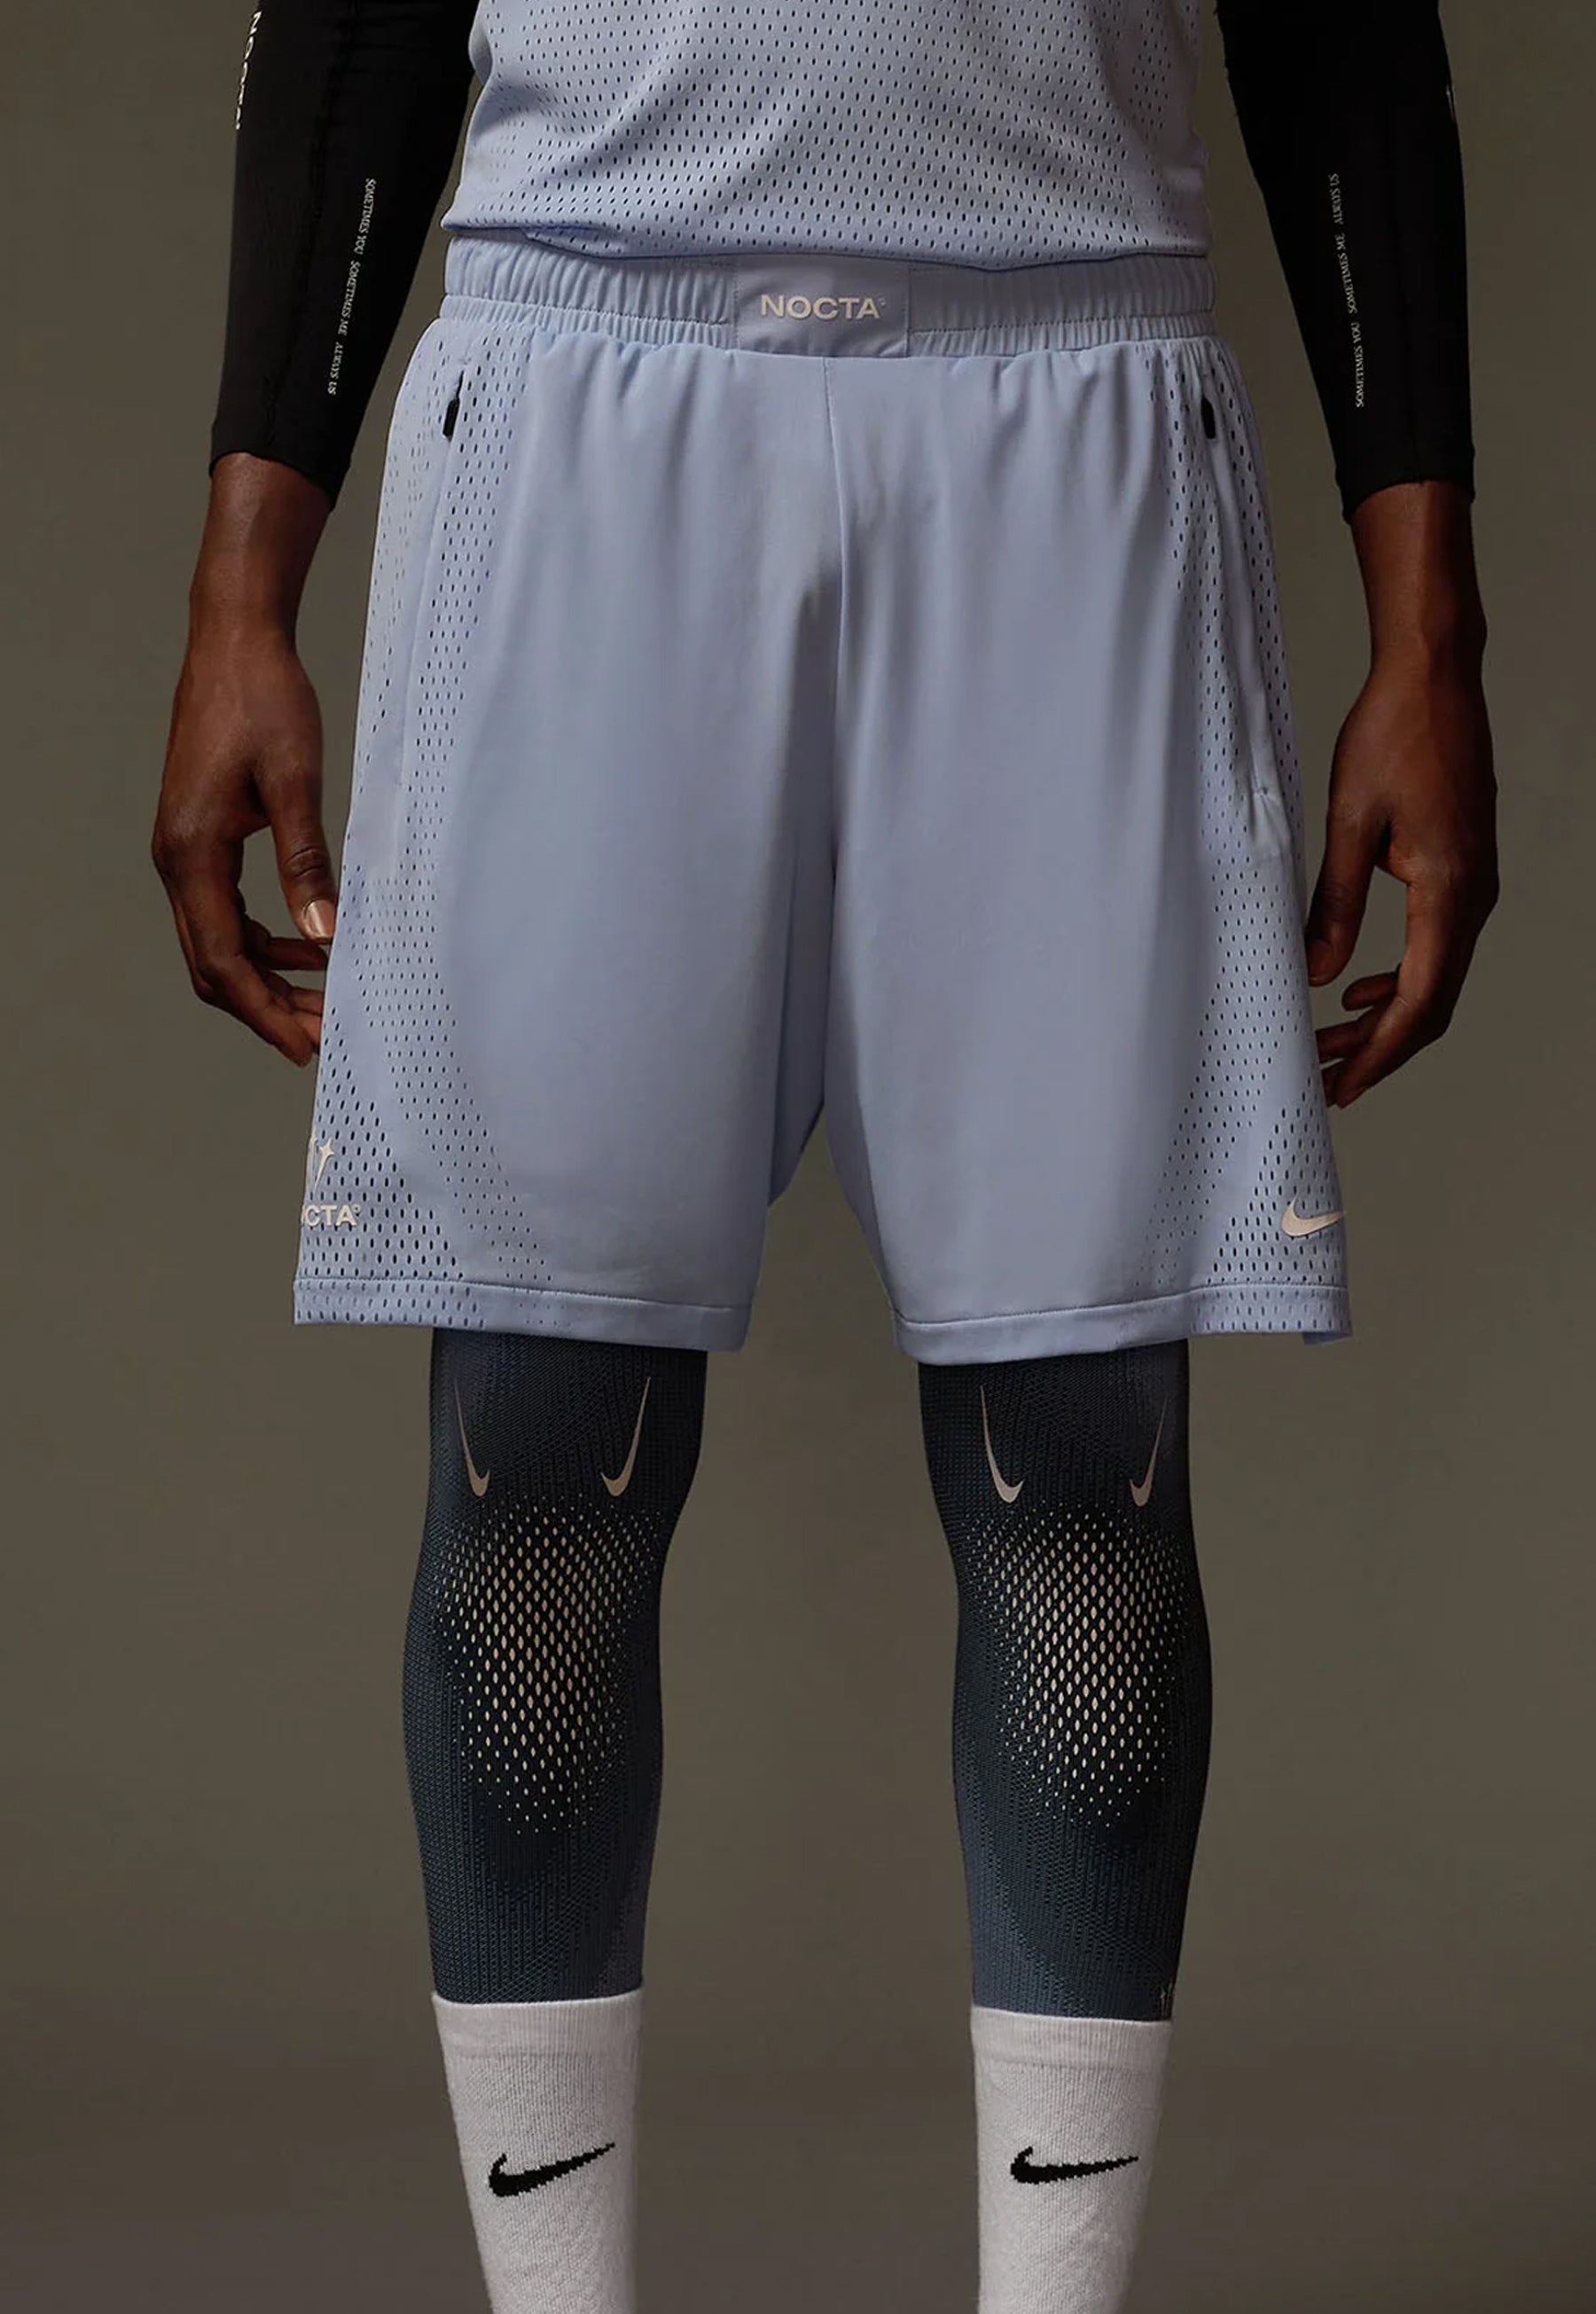 Nike NOCTA Dri-FIT Knit Tights / Cobalt Bliss – size? Canada